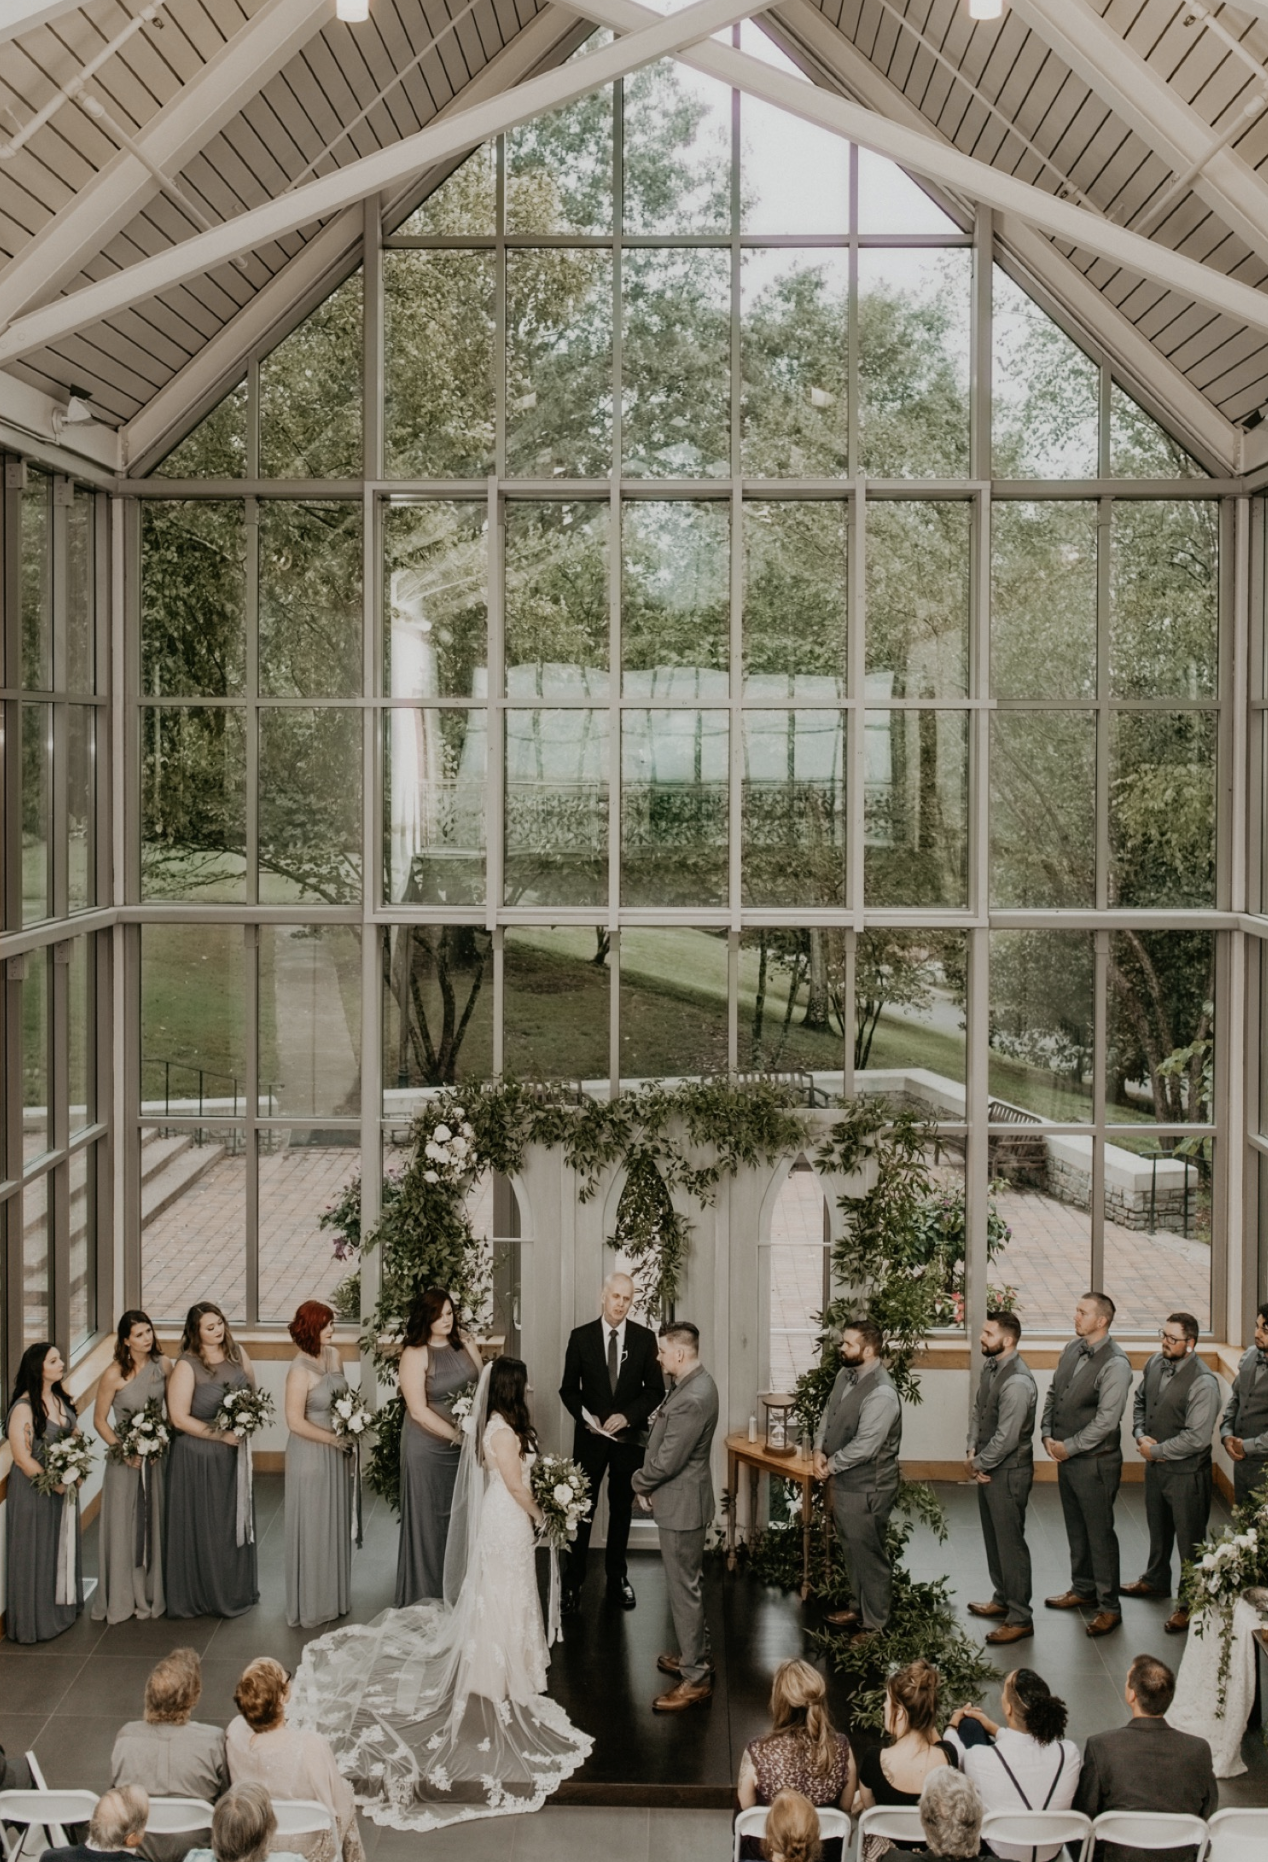 The couple's ceremony inside the Cheekwood Botanical Wedding venue with glass windows.